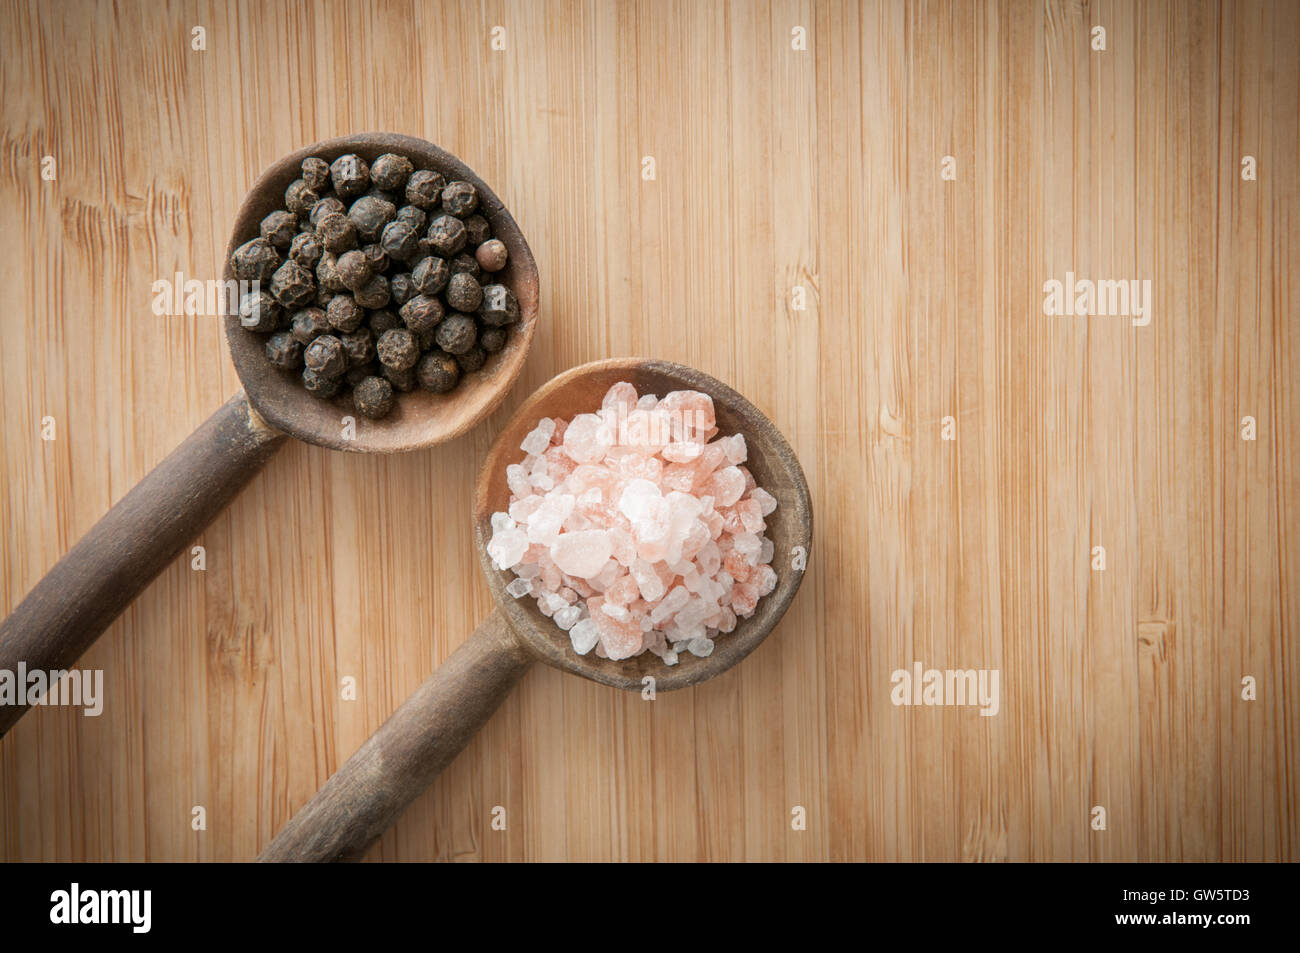 Salt and pepper seasonings of pepper corns and rock salt on wooden spoons Stock Photo